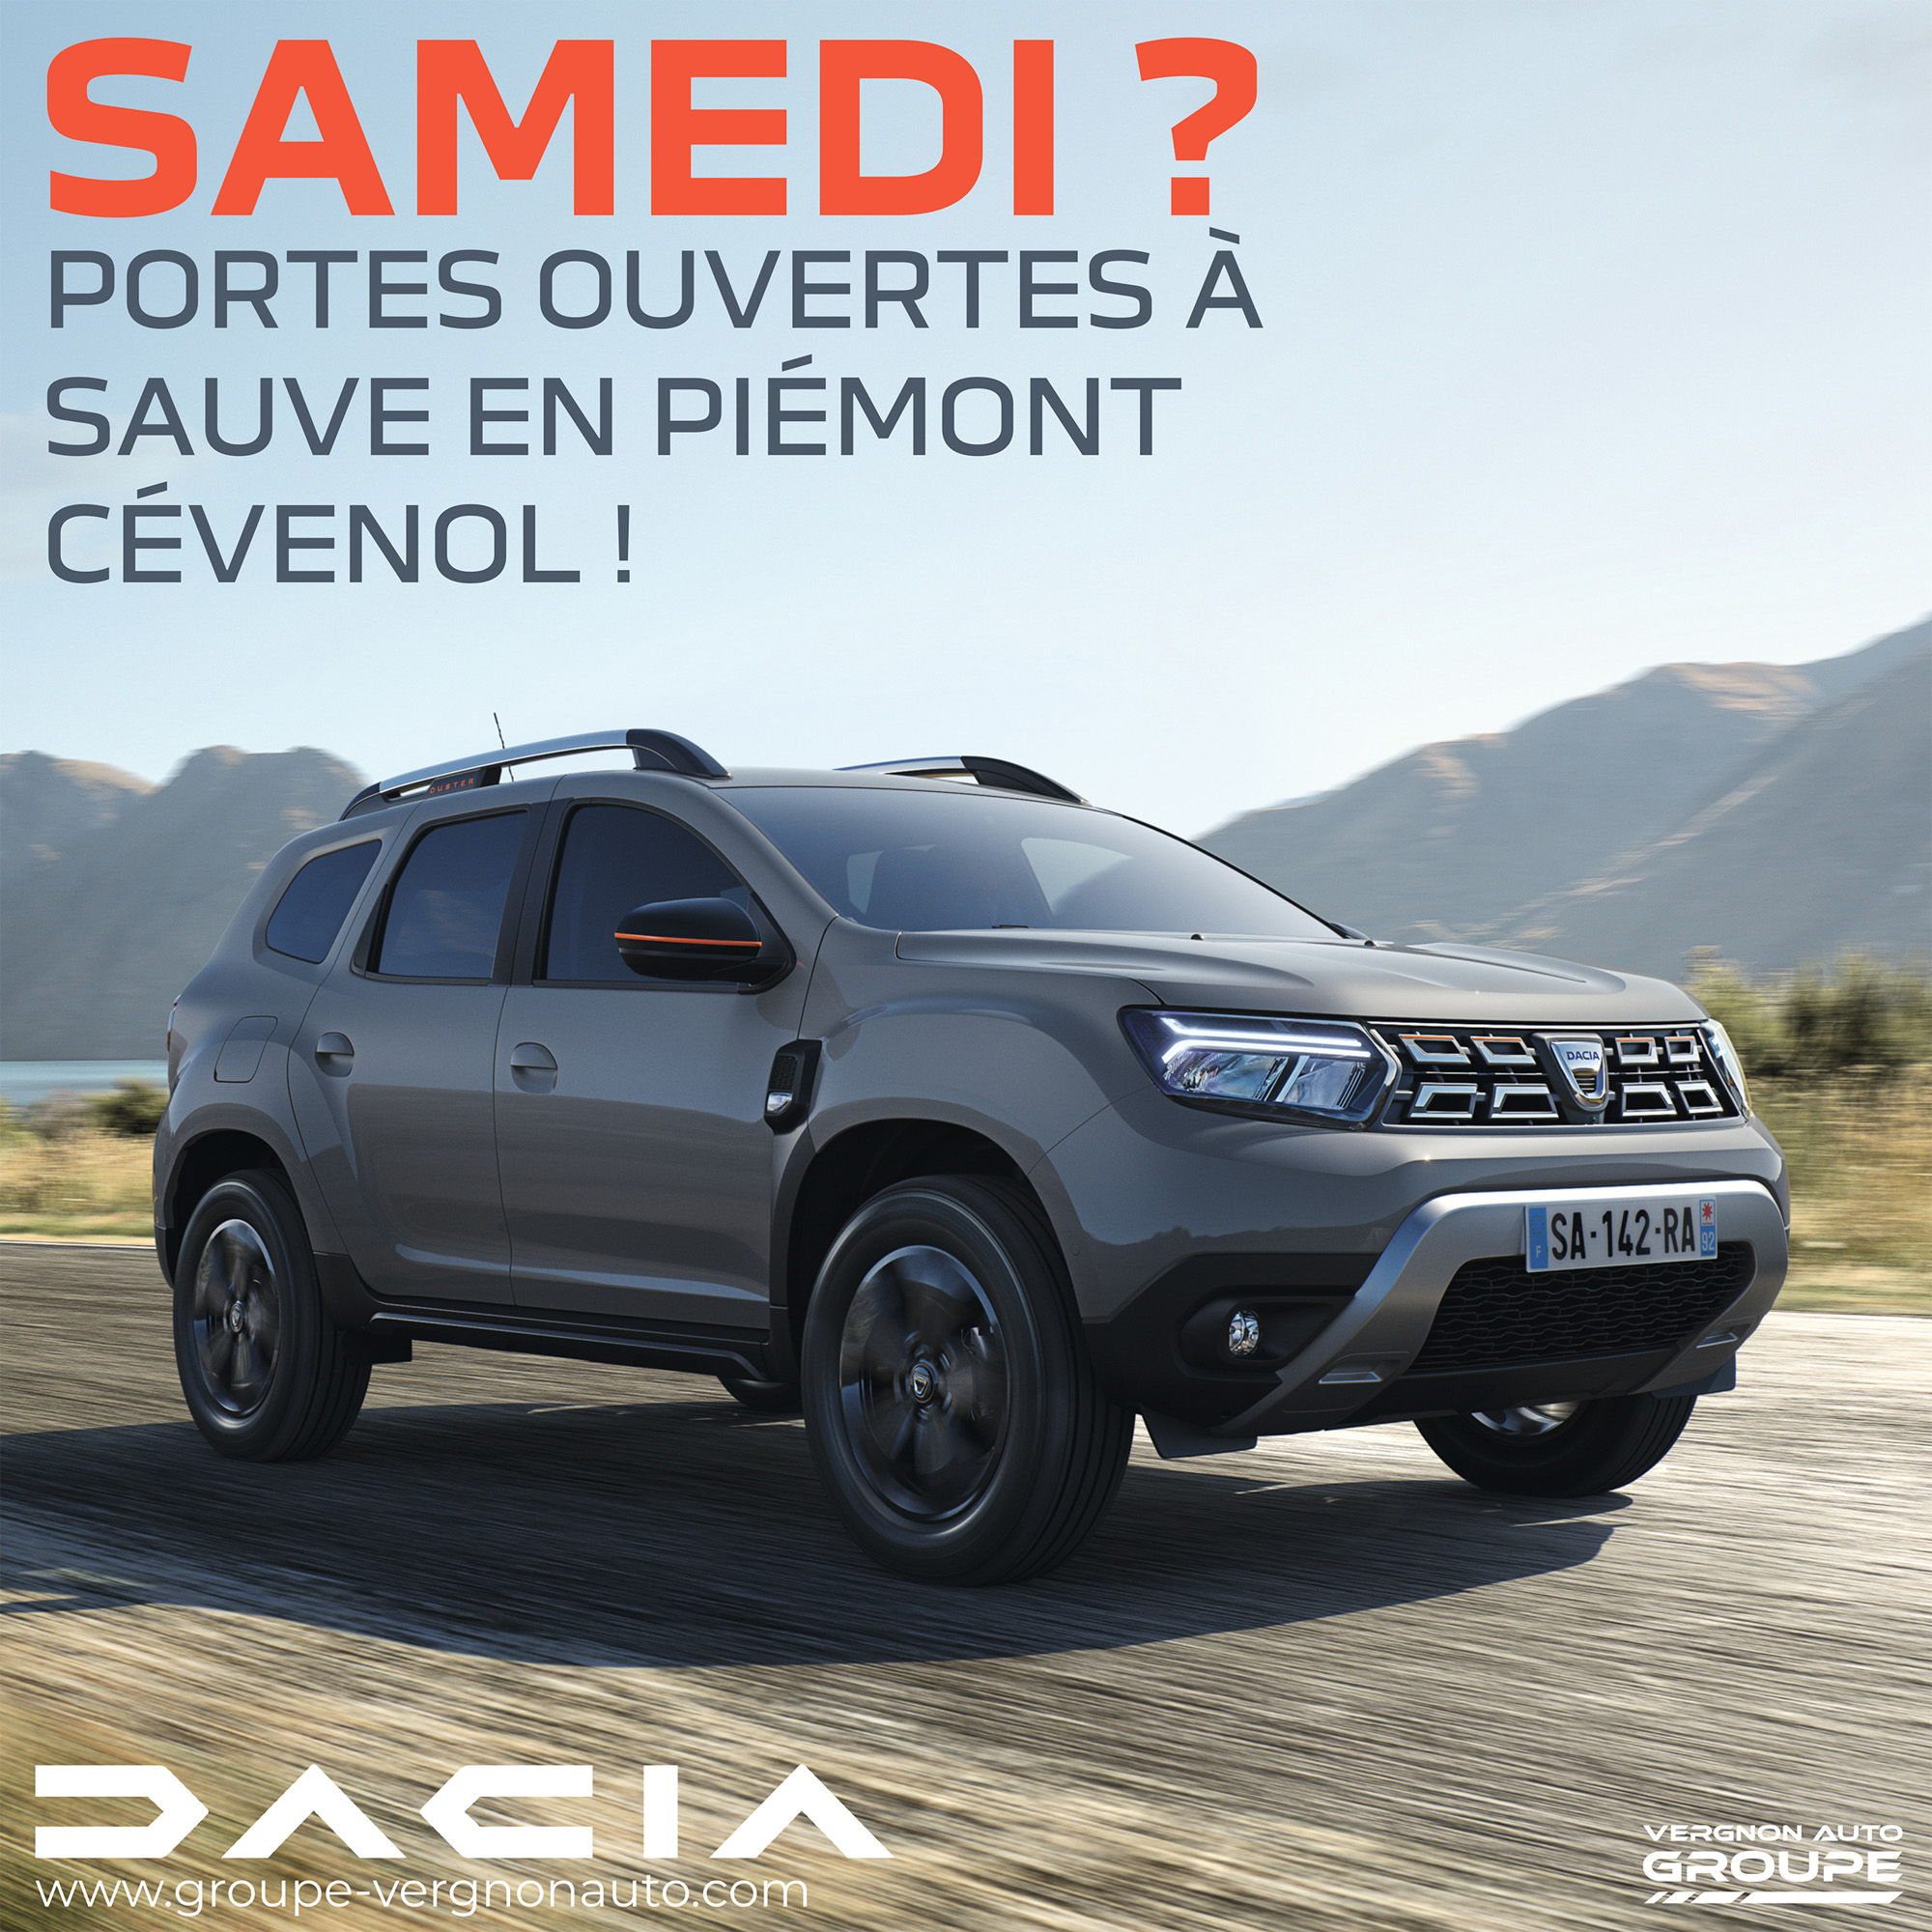 Portes ouvertes Vergnon Auto Dacia Sauve Gard 30 Piémont cévenol Occitanie